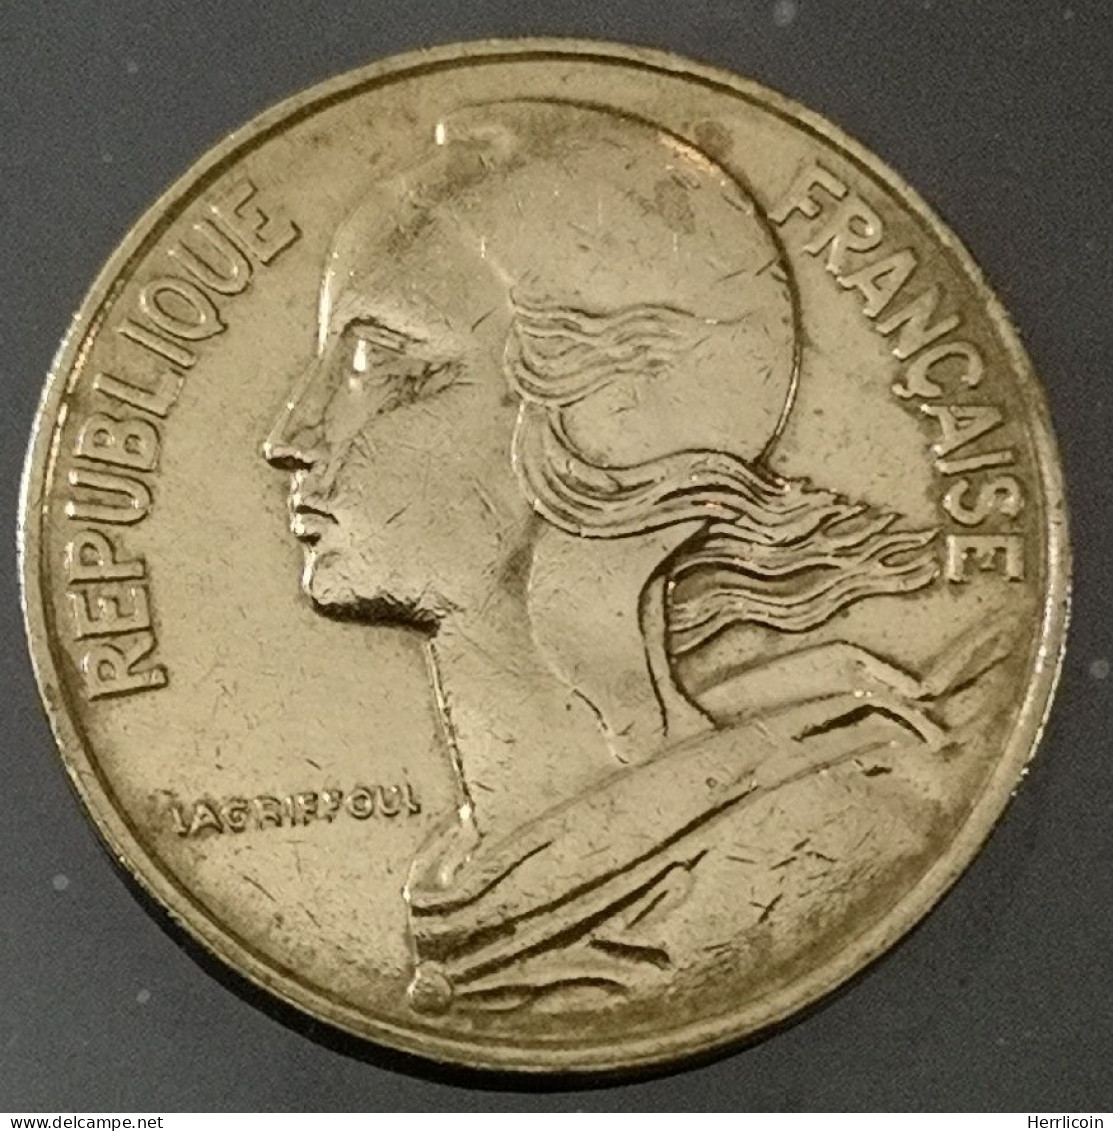 Monnaie France - 1995 - 10 Centimes Marianne - 10 Centimes